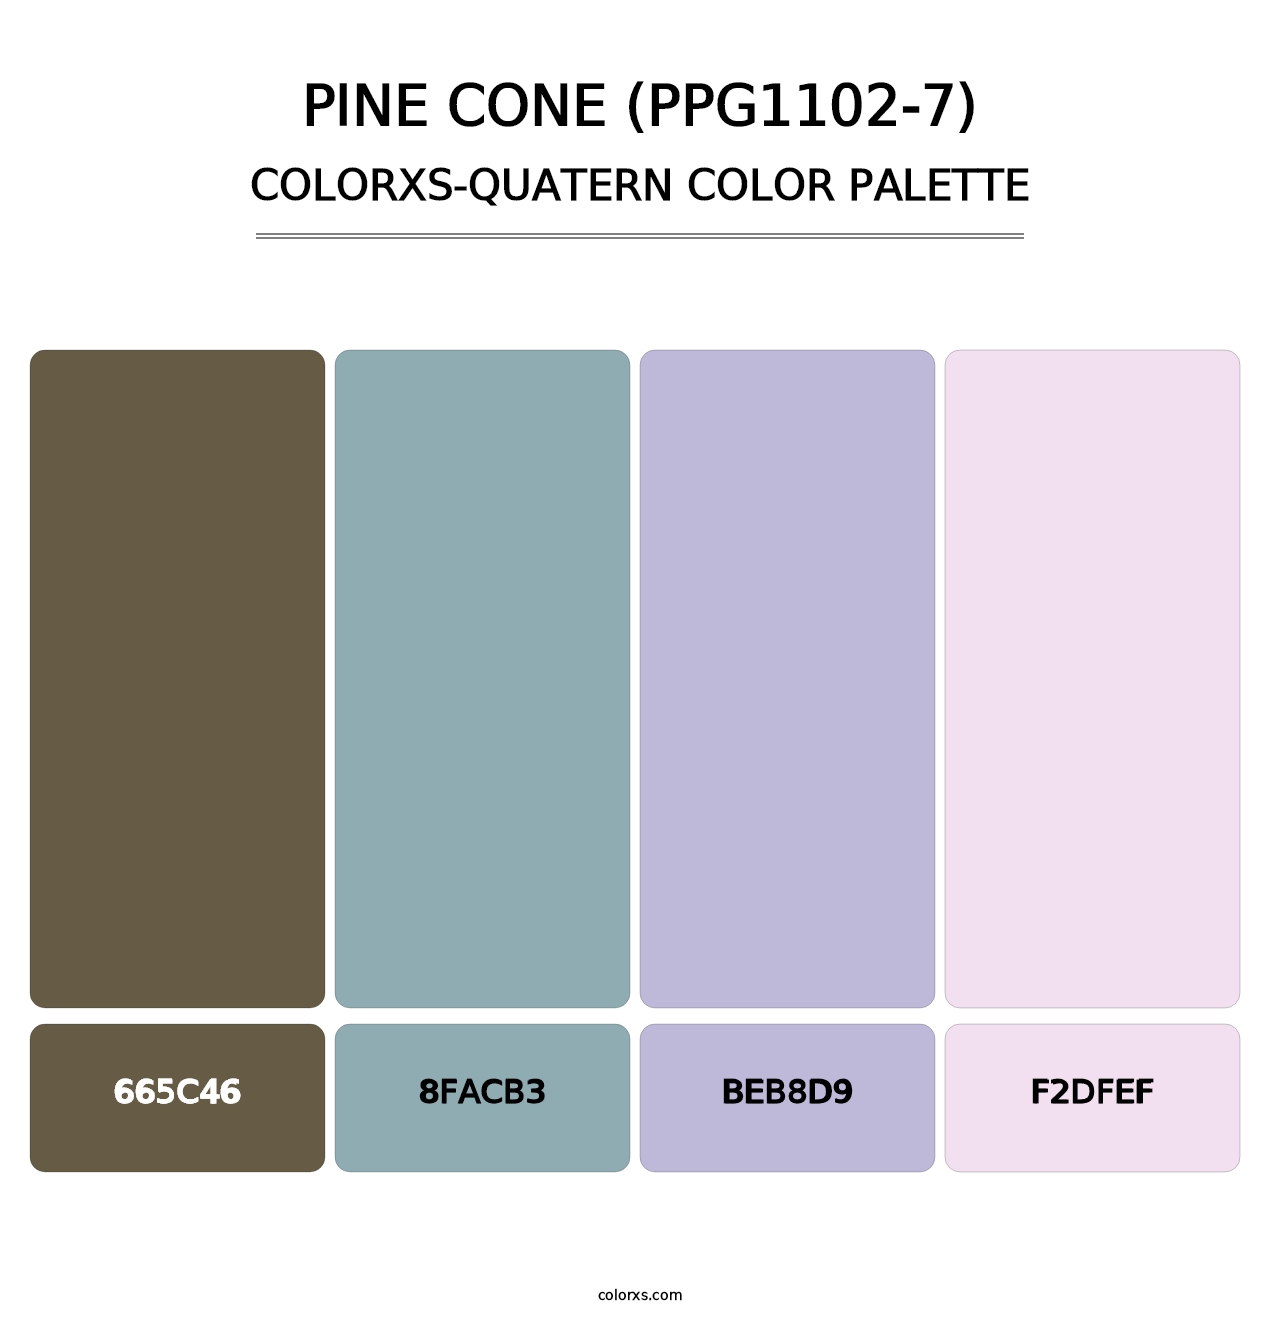 Pine Cone (PPG1102-7) - Colorxs Quatern Palette